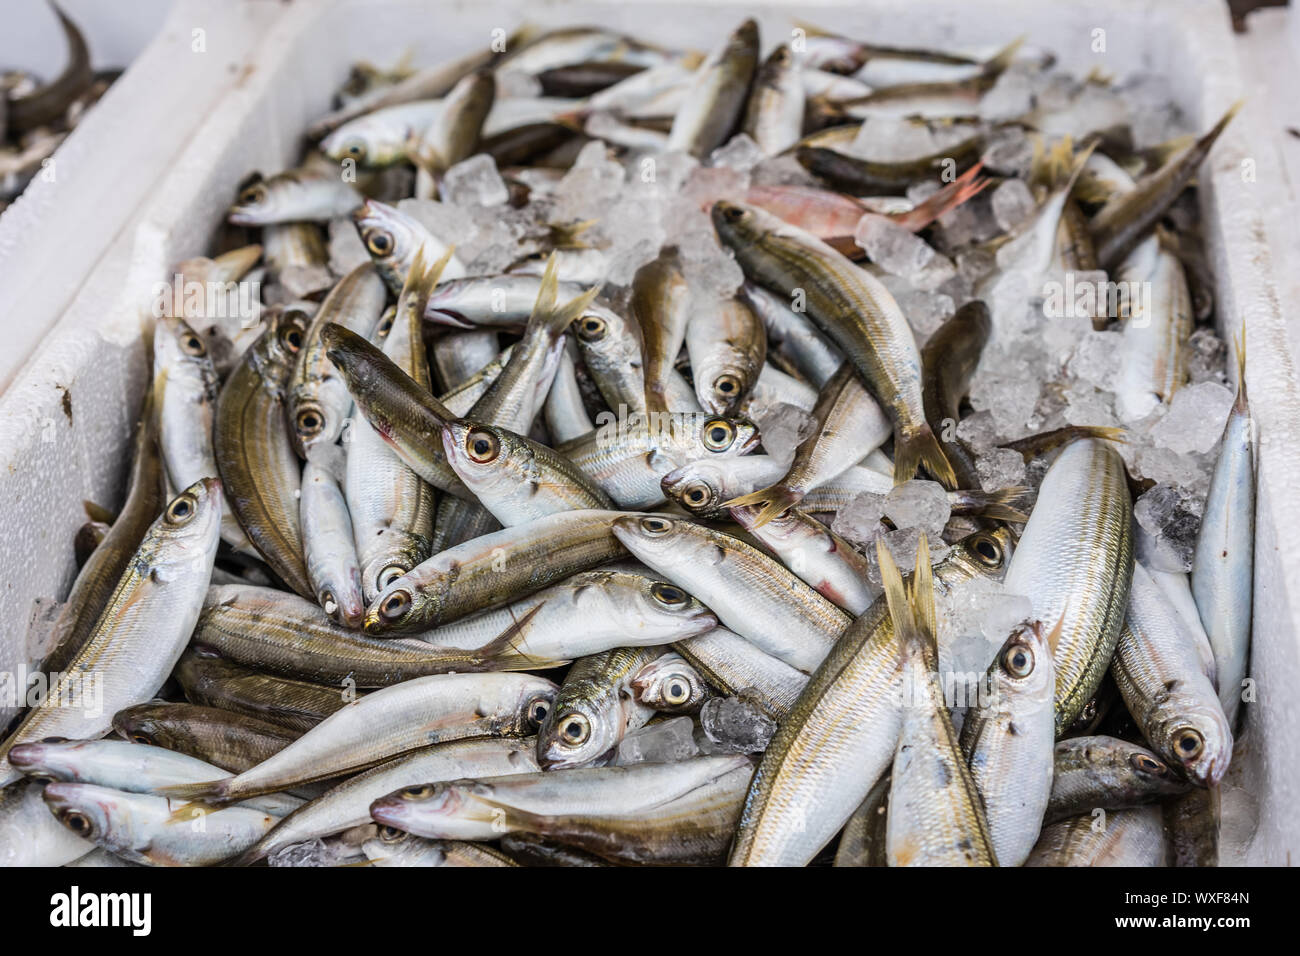 Box of tiny freshly caught sardines Stock Photo